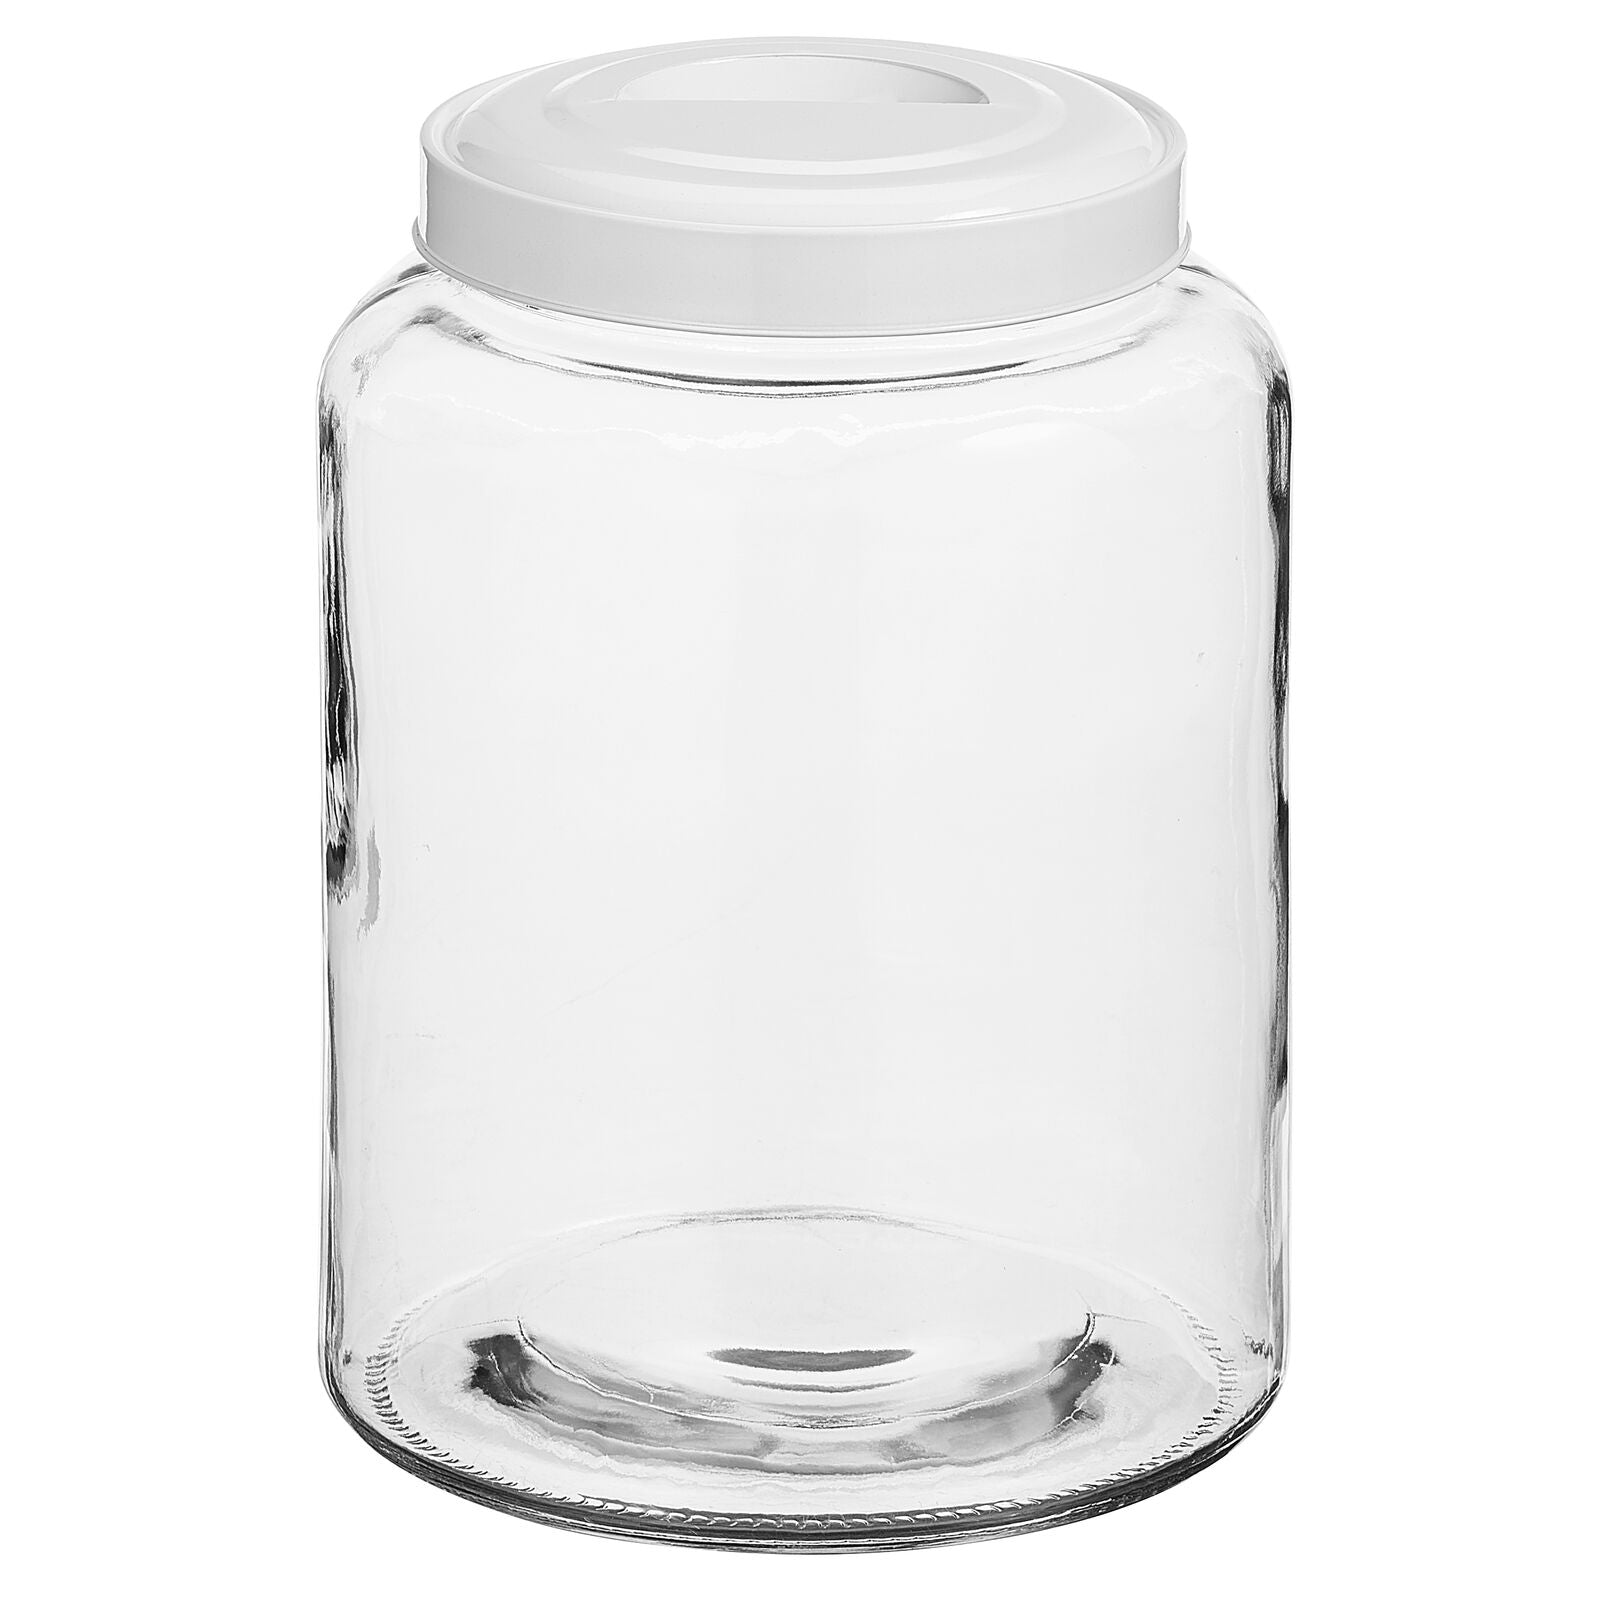 factory direct empty glass jar kitchen